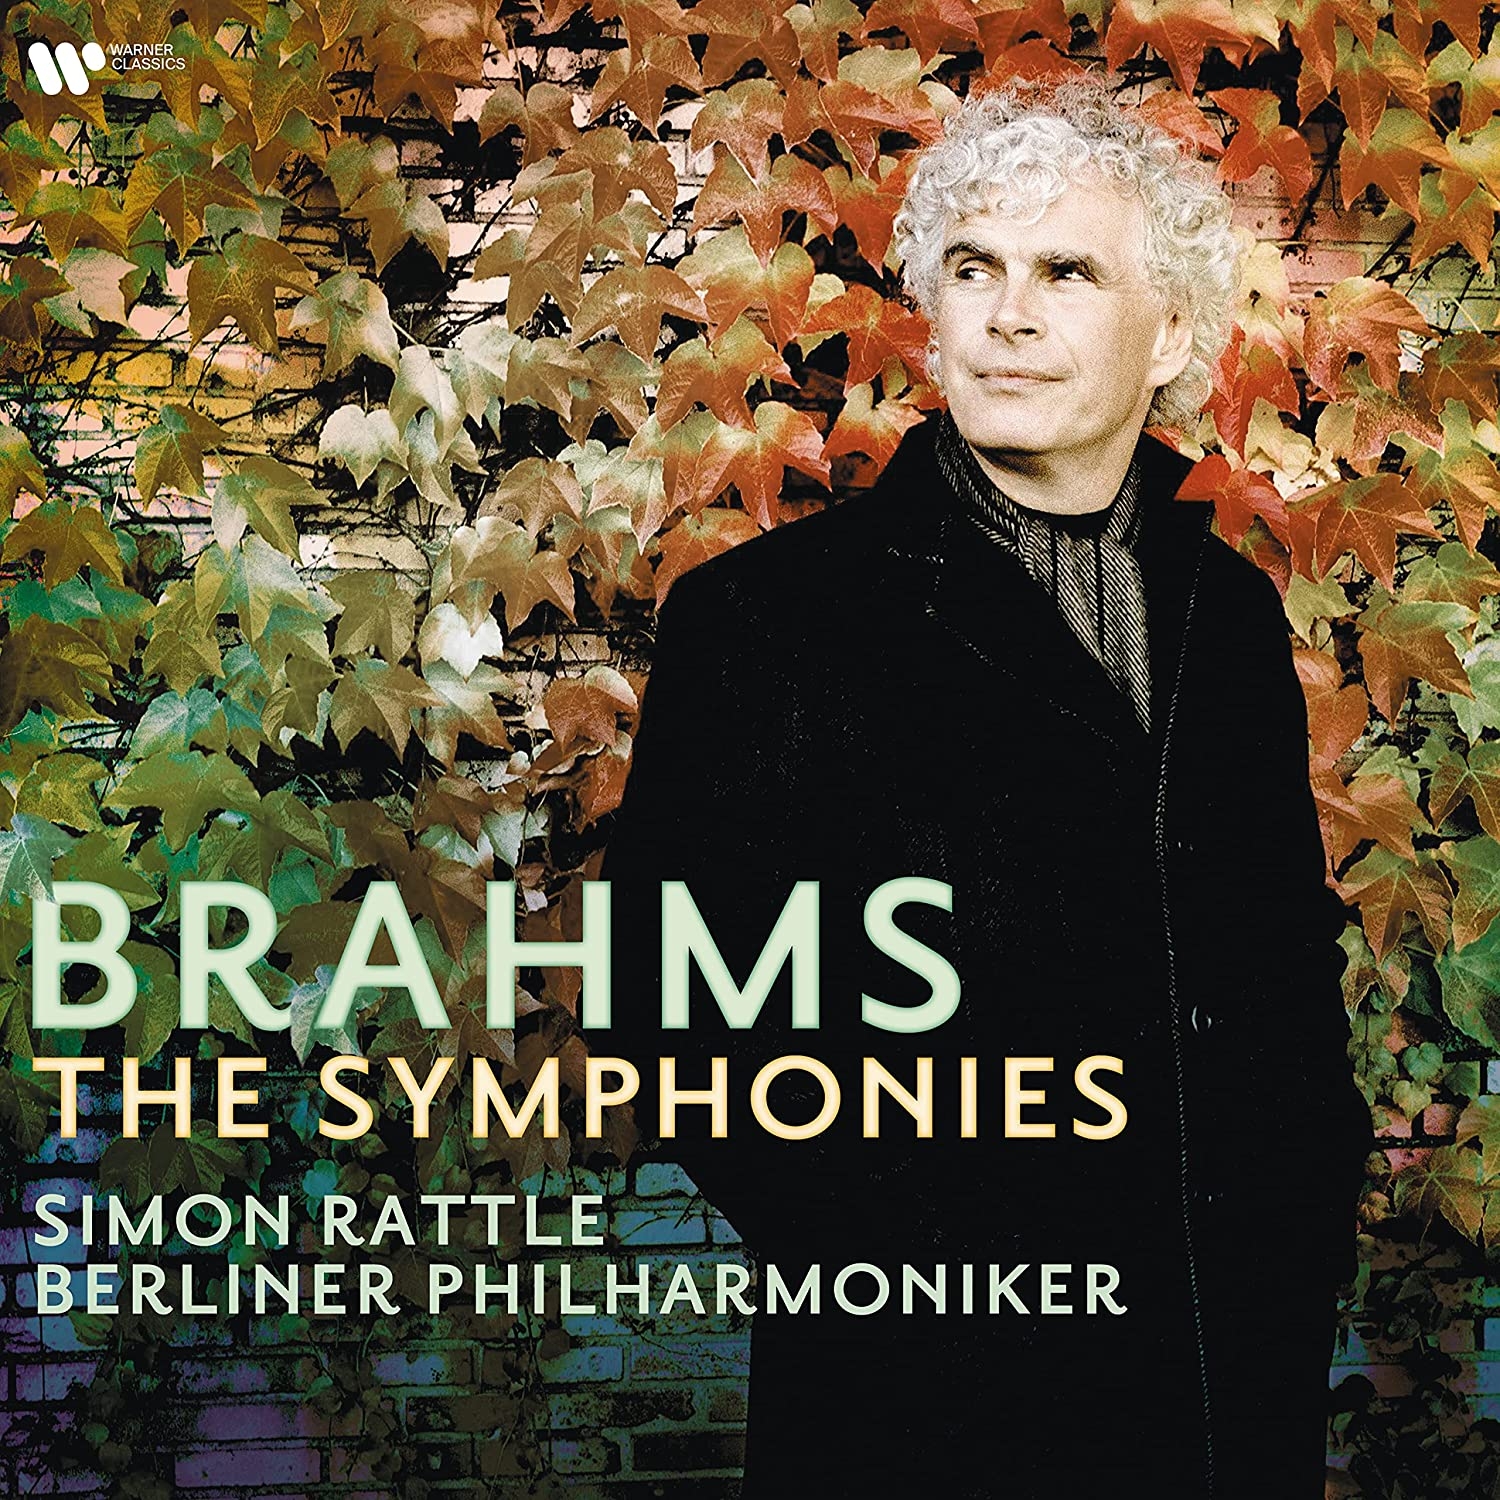 Виниловая Пластинка Simon Rattle/Berliner Philharmoniker, Brahms: The Symphonies (0190296266966) цена и фото